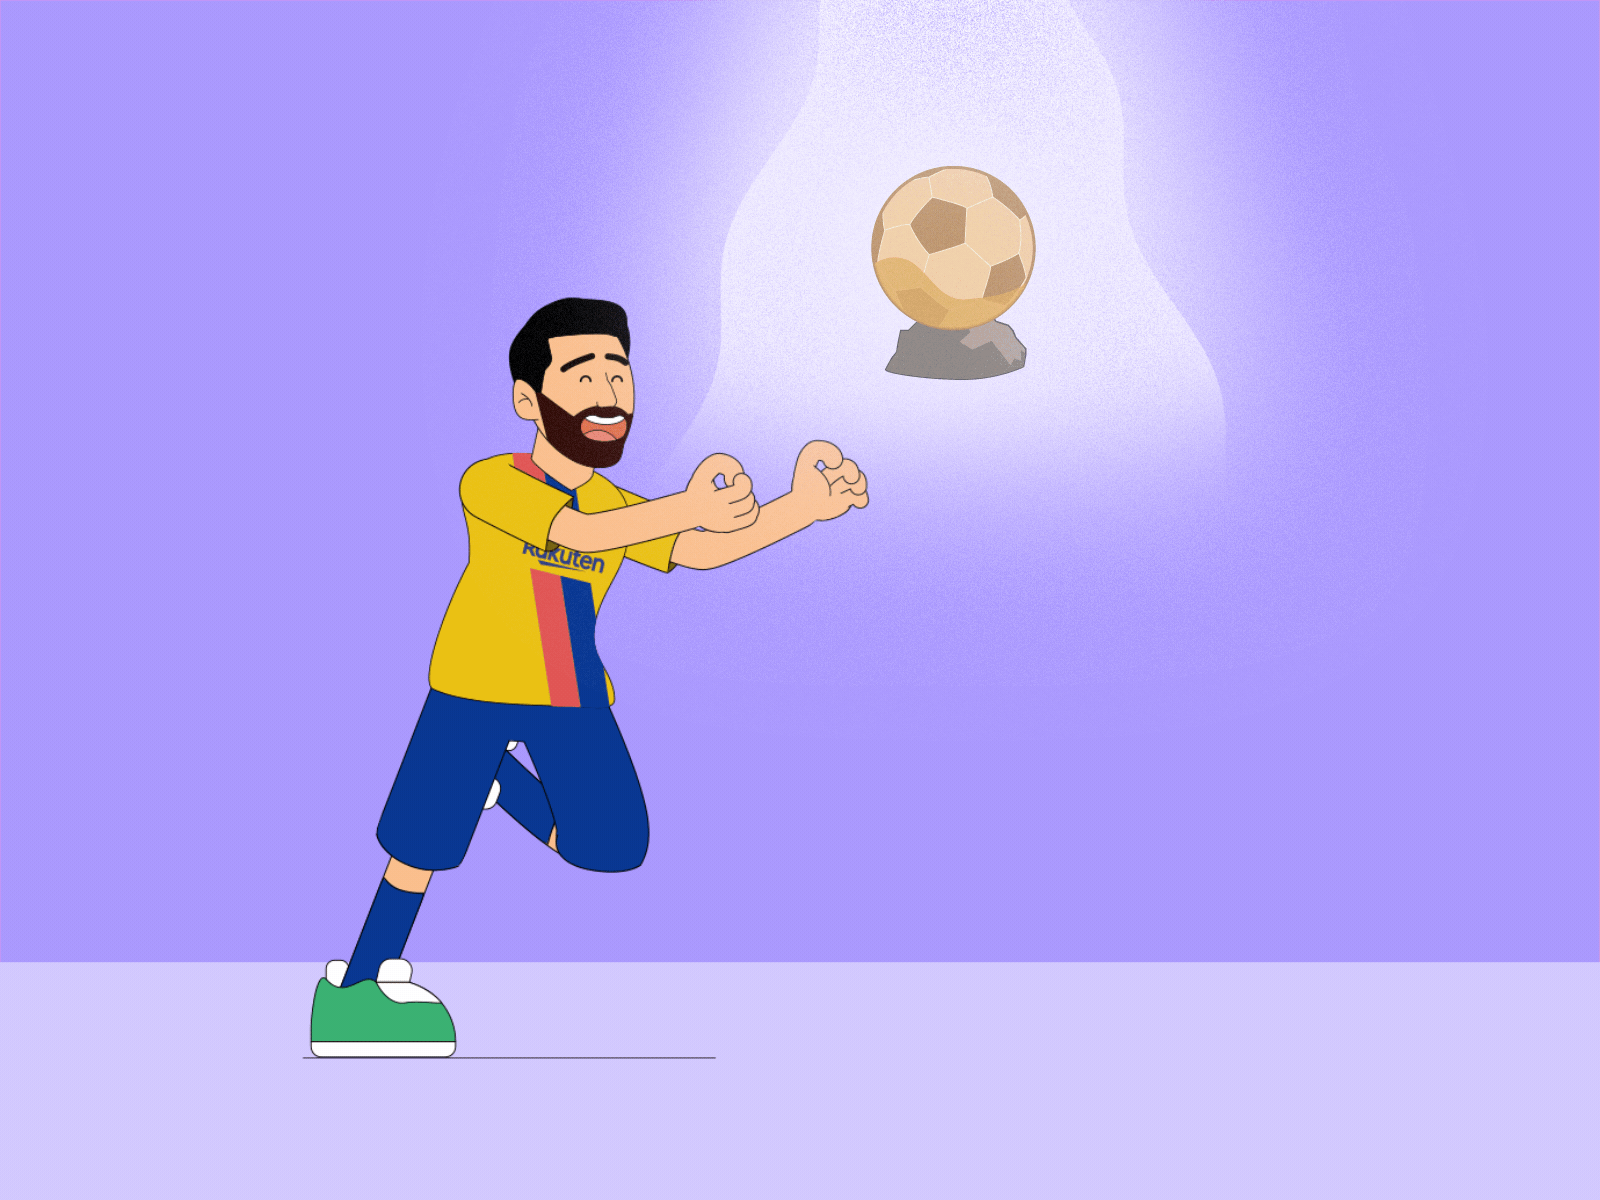 Lionel Messi Amazing Free Kick Goal  Villarreal vs Barcelona 11   08012017 animated gif